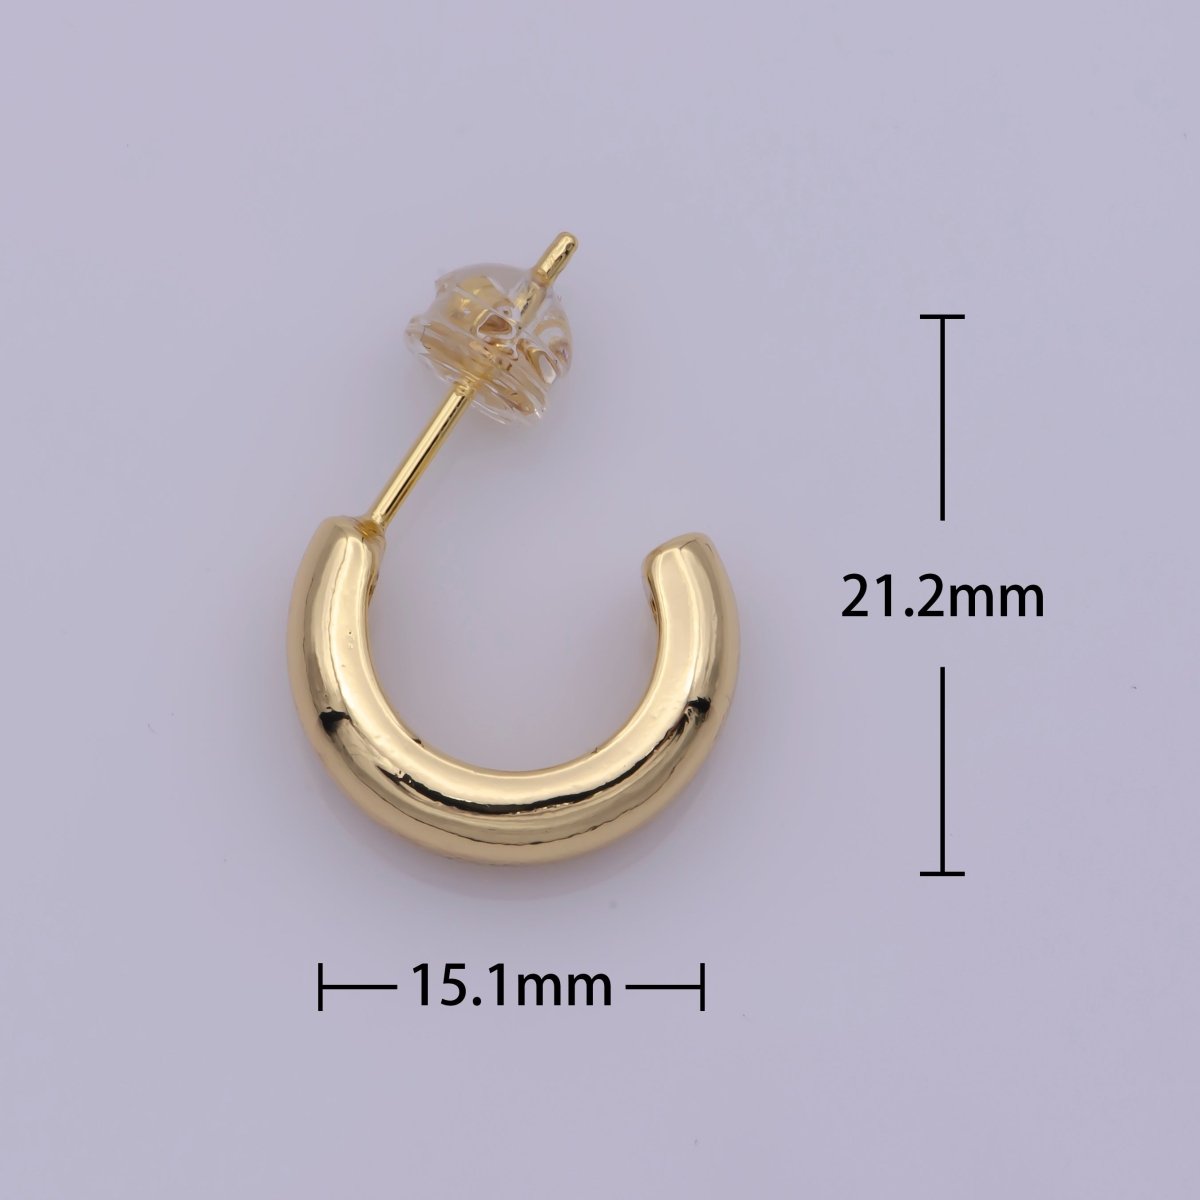 OS Minimalist Geometric Earrings Classic Tube Hoop Earring Gold Filled Hoop Earring Gift For Her! T-239 - DLUXCA